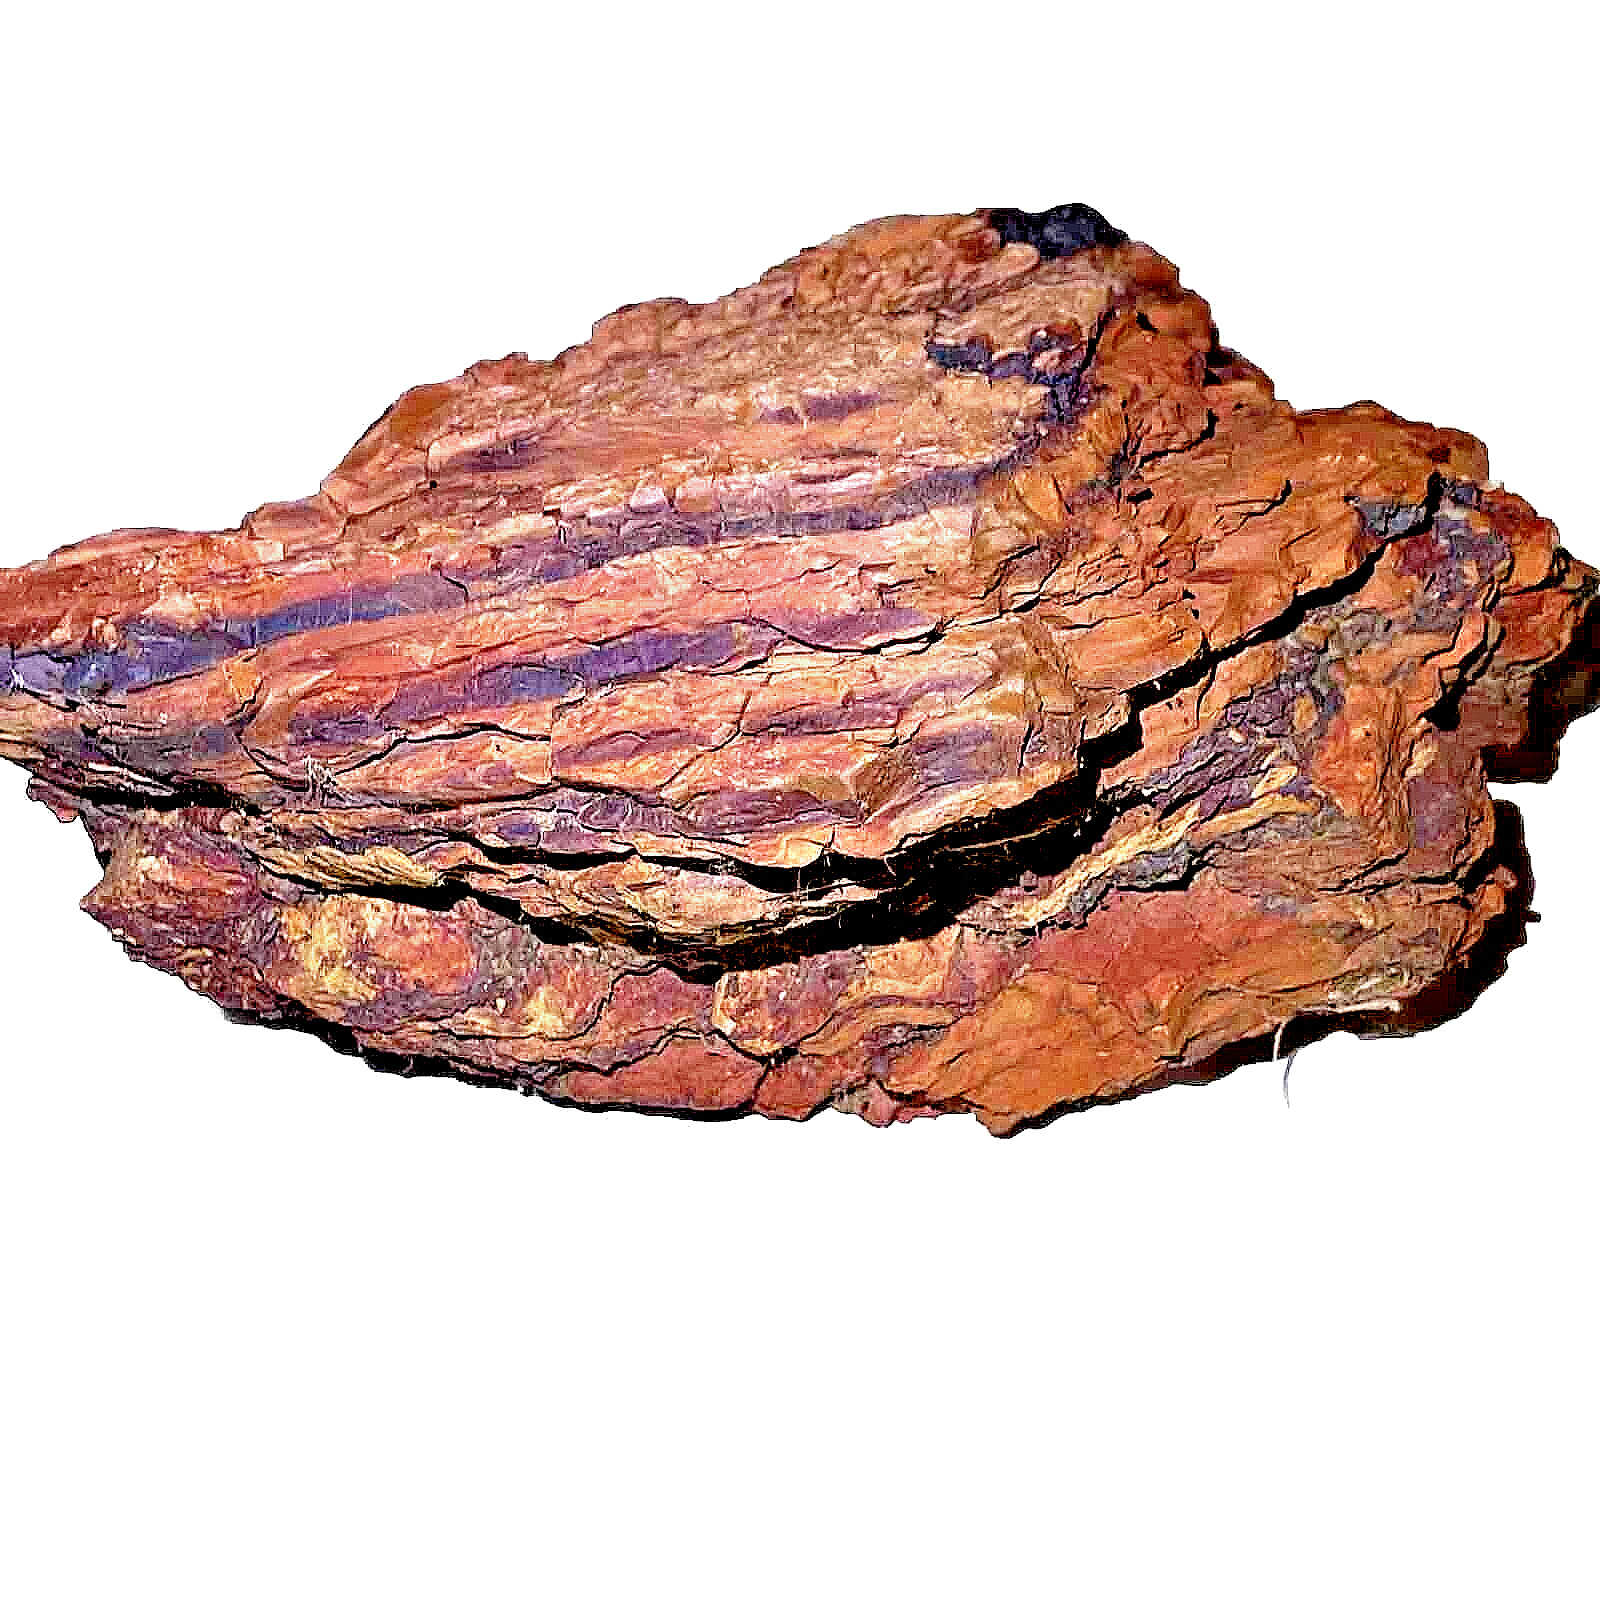 Natural Genuine Shale “mud rock” Sedimentary Mineral Specimen  8lbs 13oz 9.5x8.5